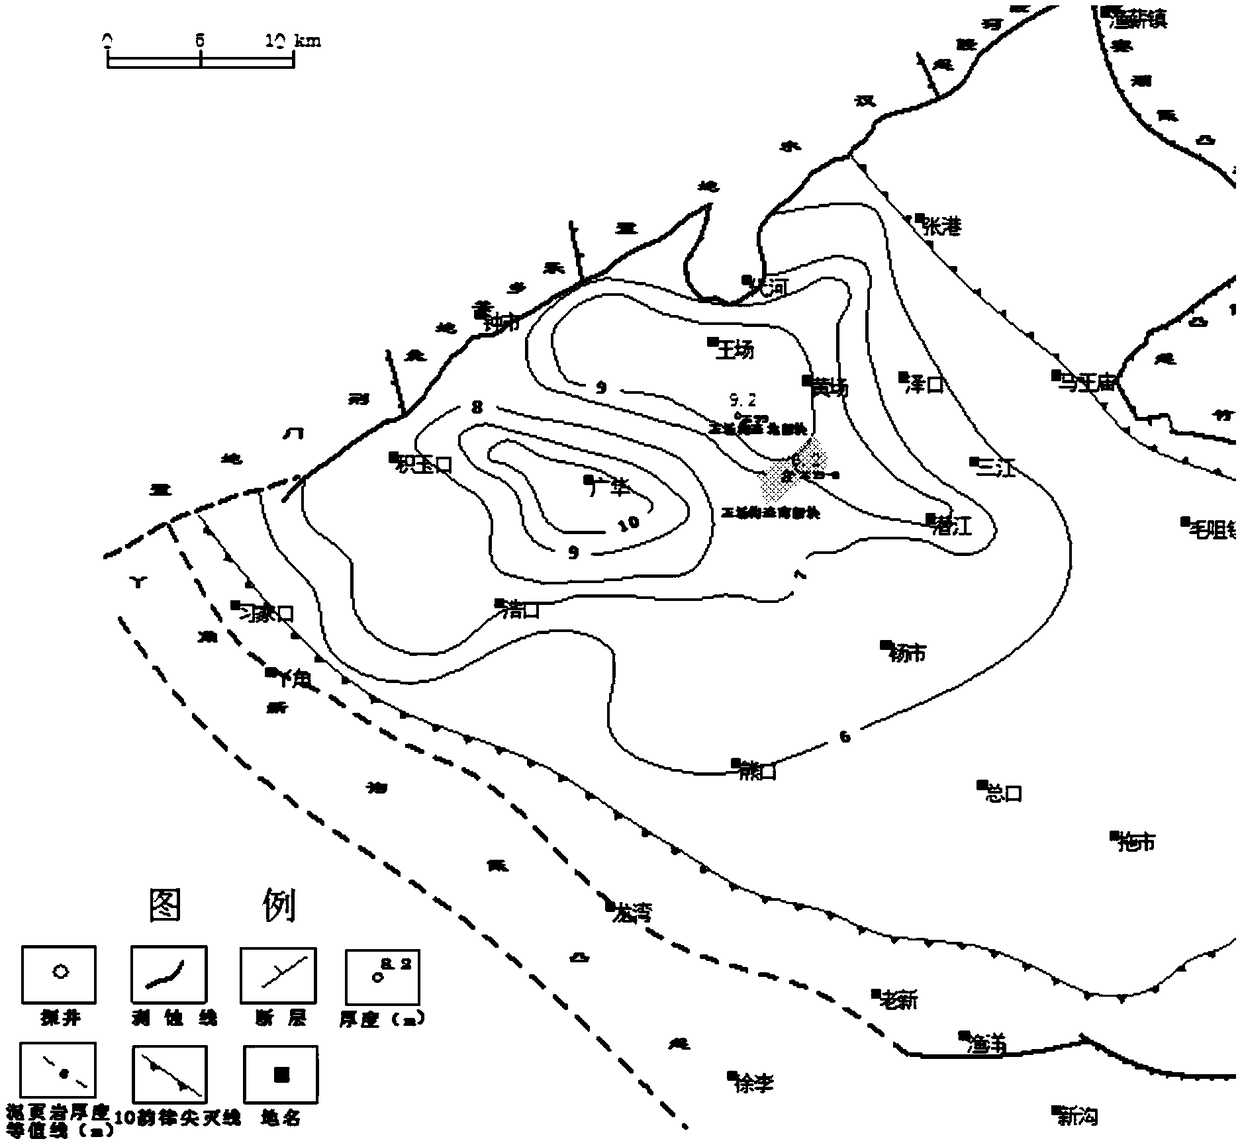 Prediction method and exploration method of geological sweet spots of reservoir of inter-salt shale series of strata